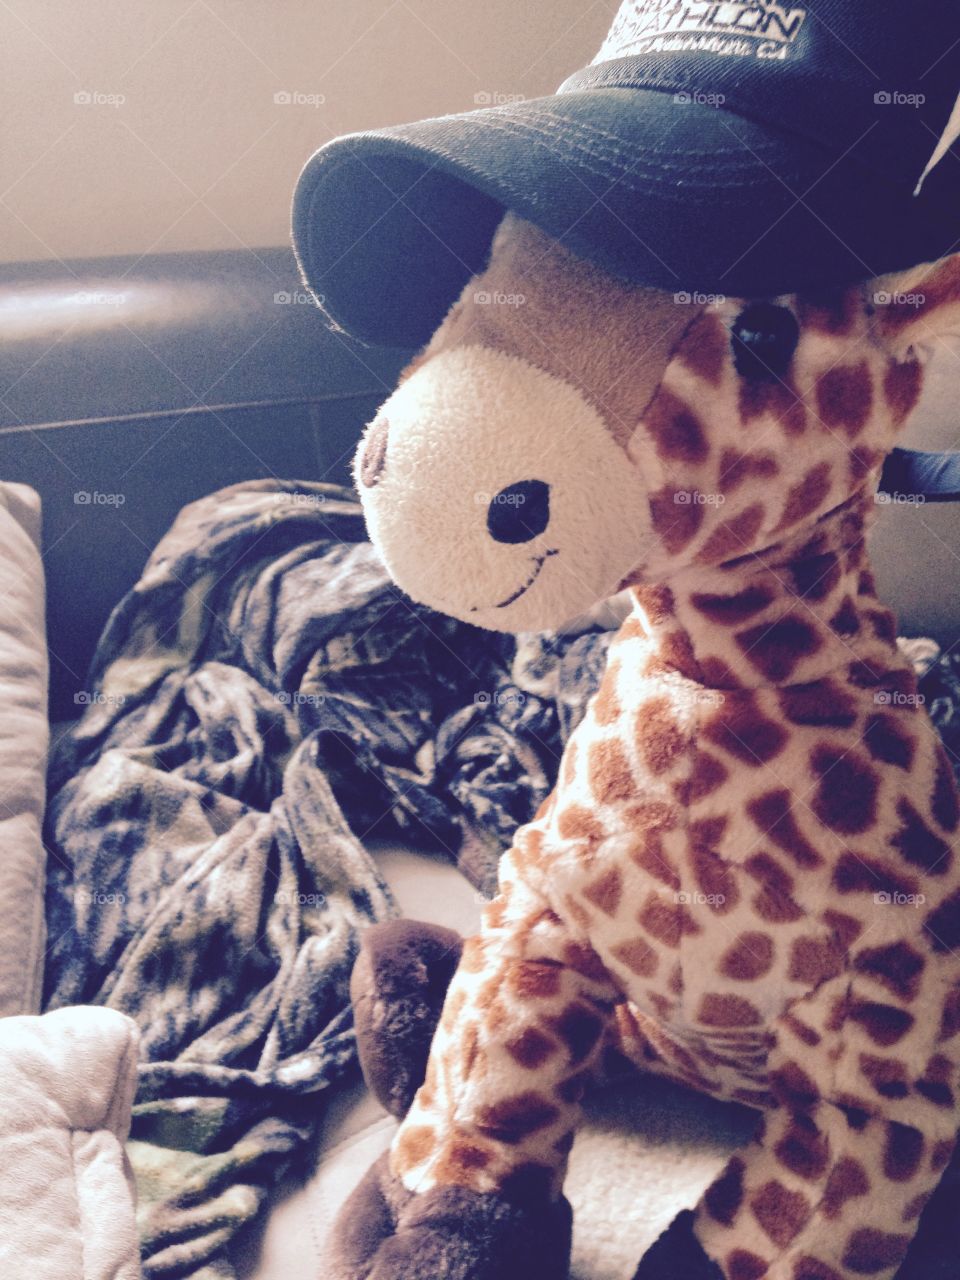 Giraffe with hat
